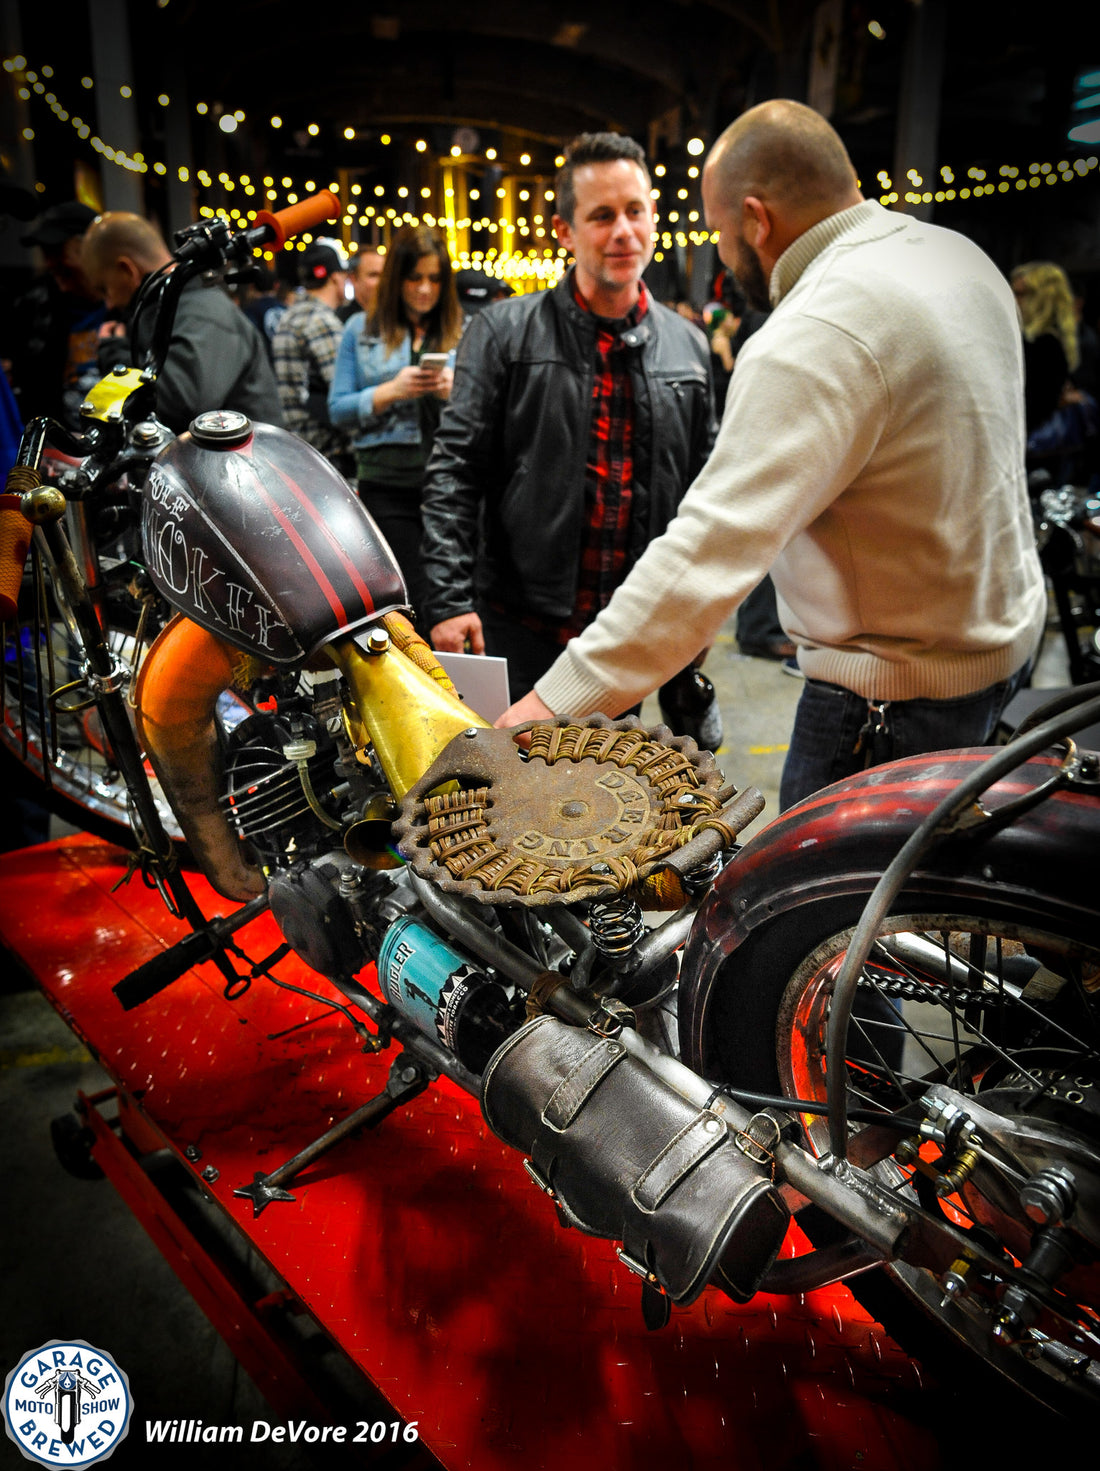 3rd Annual Garage Brewed Moto Show Returns to Rhinegeist